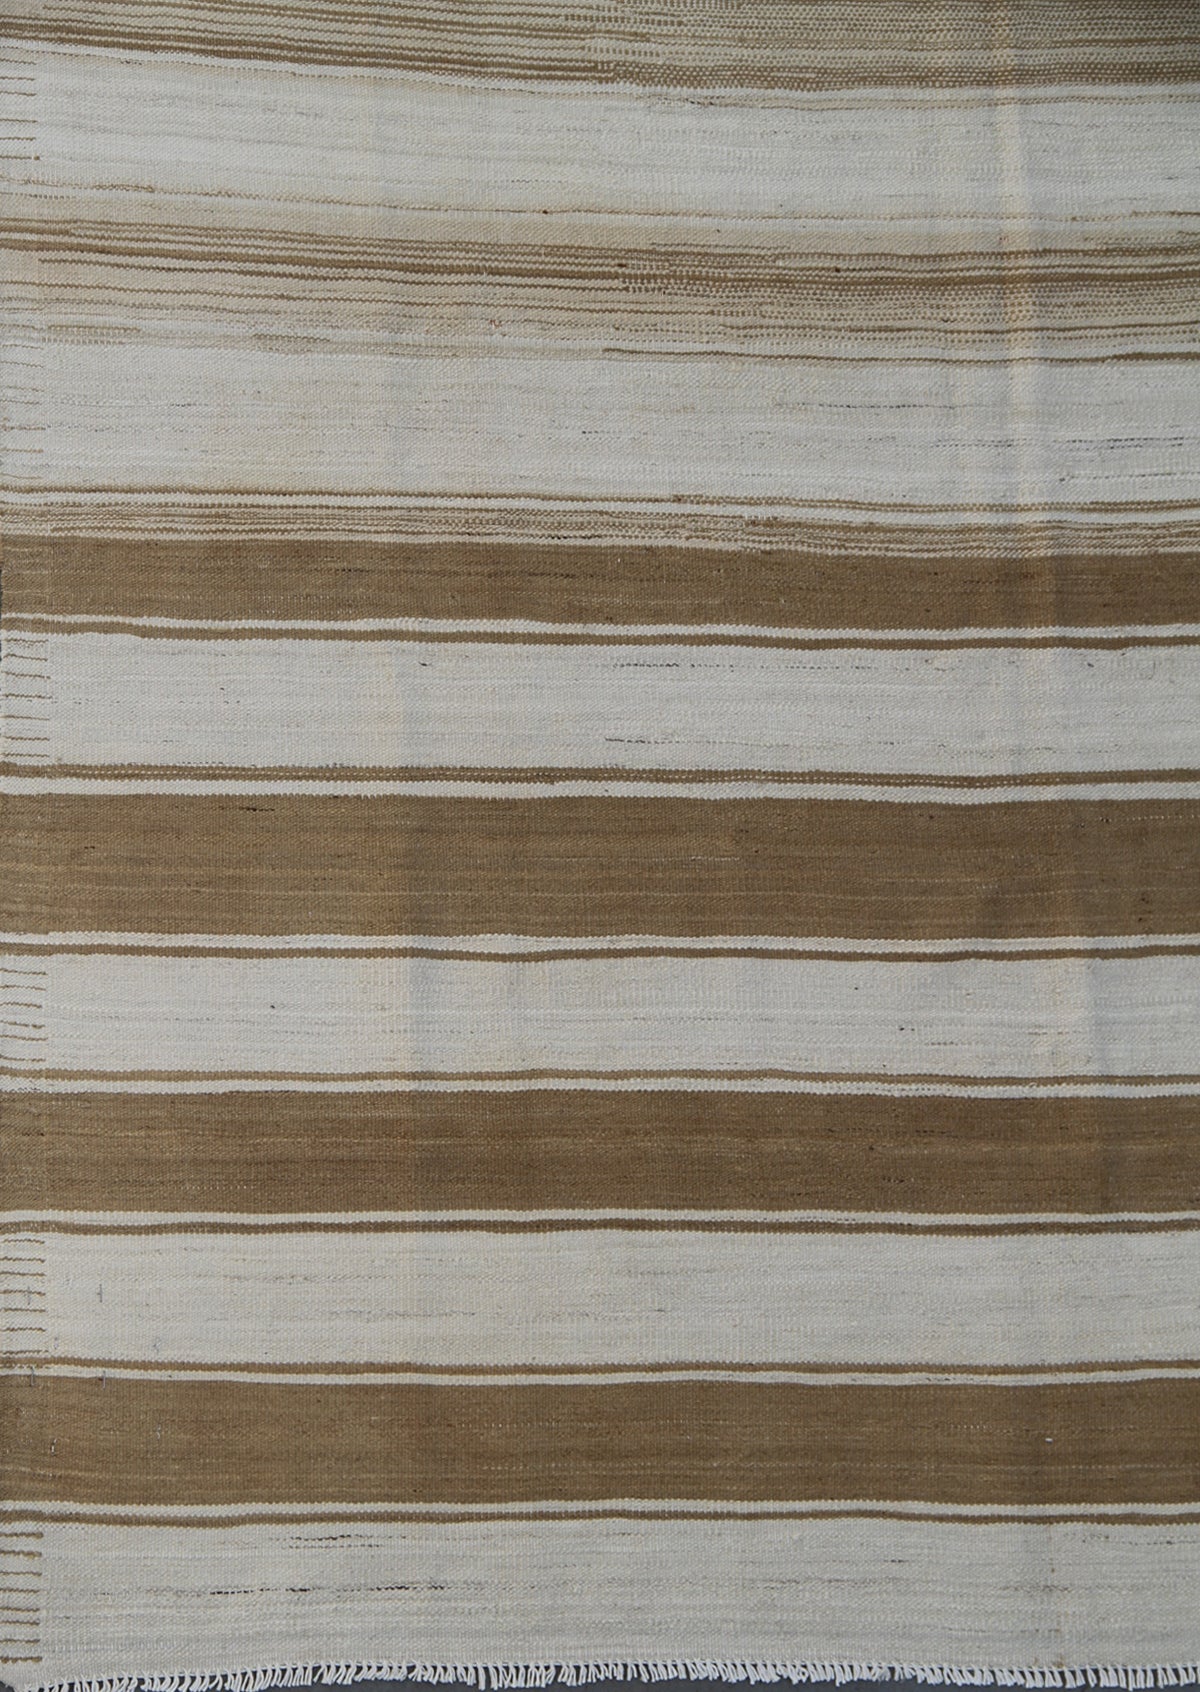 6'x10' Striped Ariana Kilim Rug